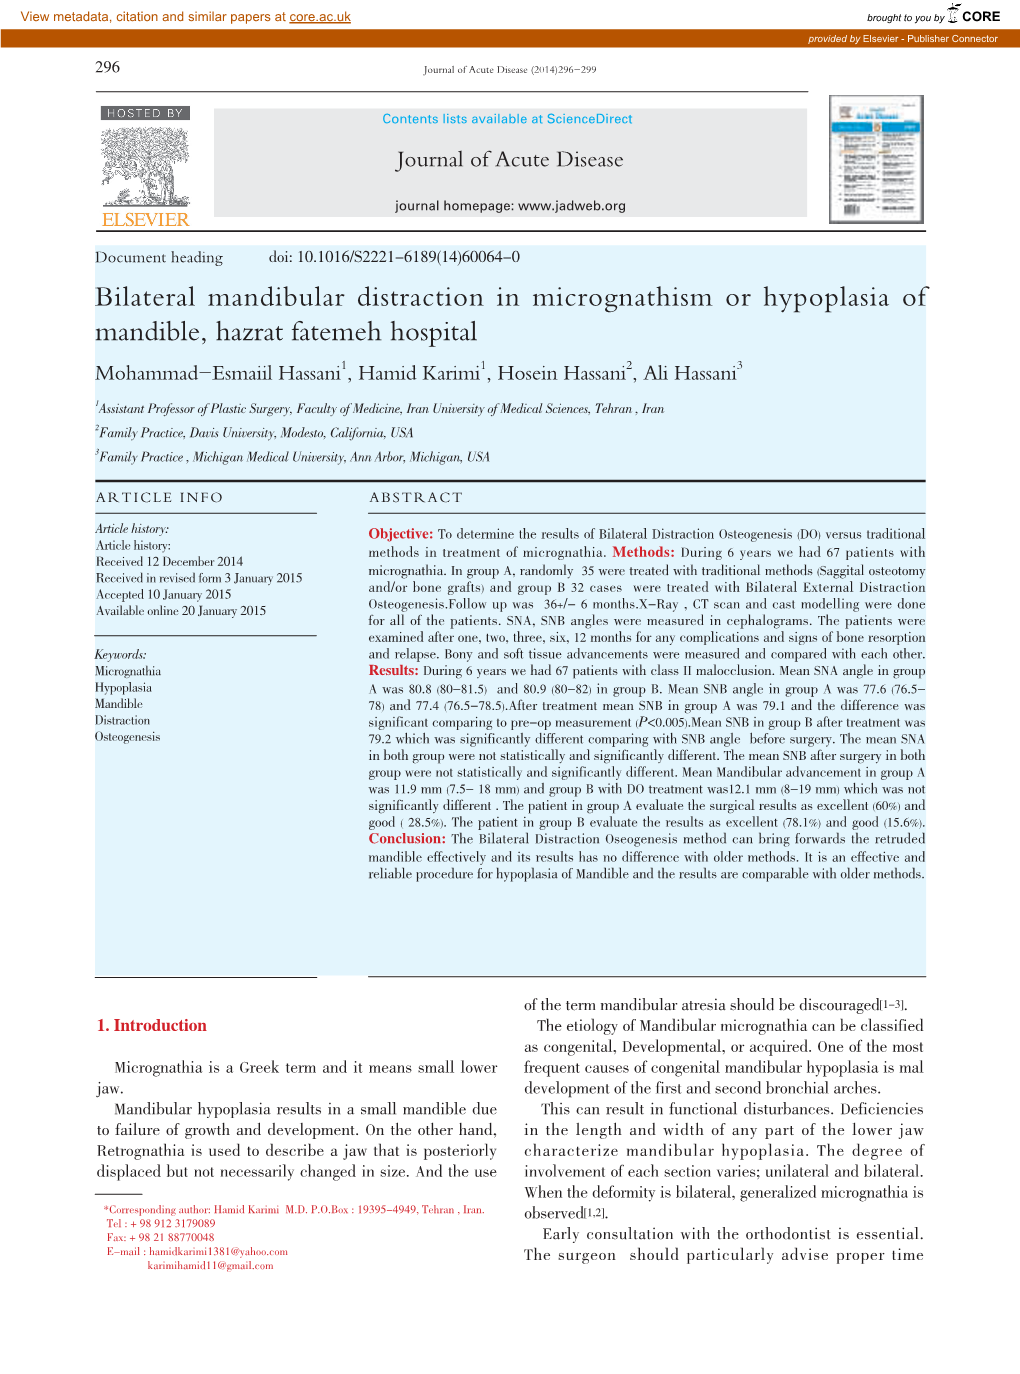 Bilateral Mandibular Distraction in Micrognathism Or Hypoplasia Of